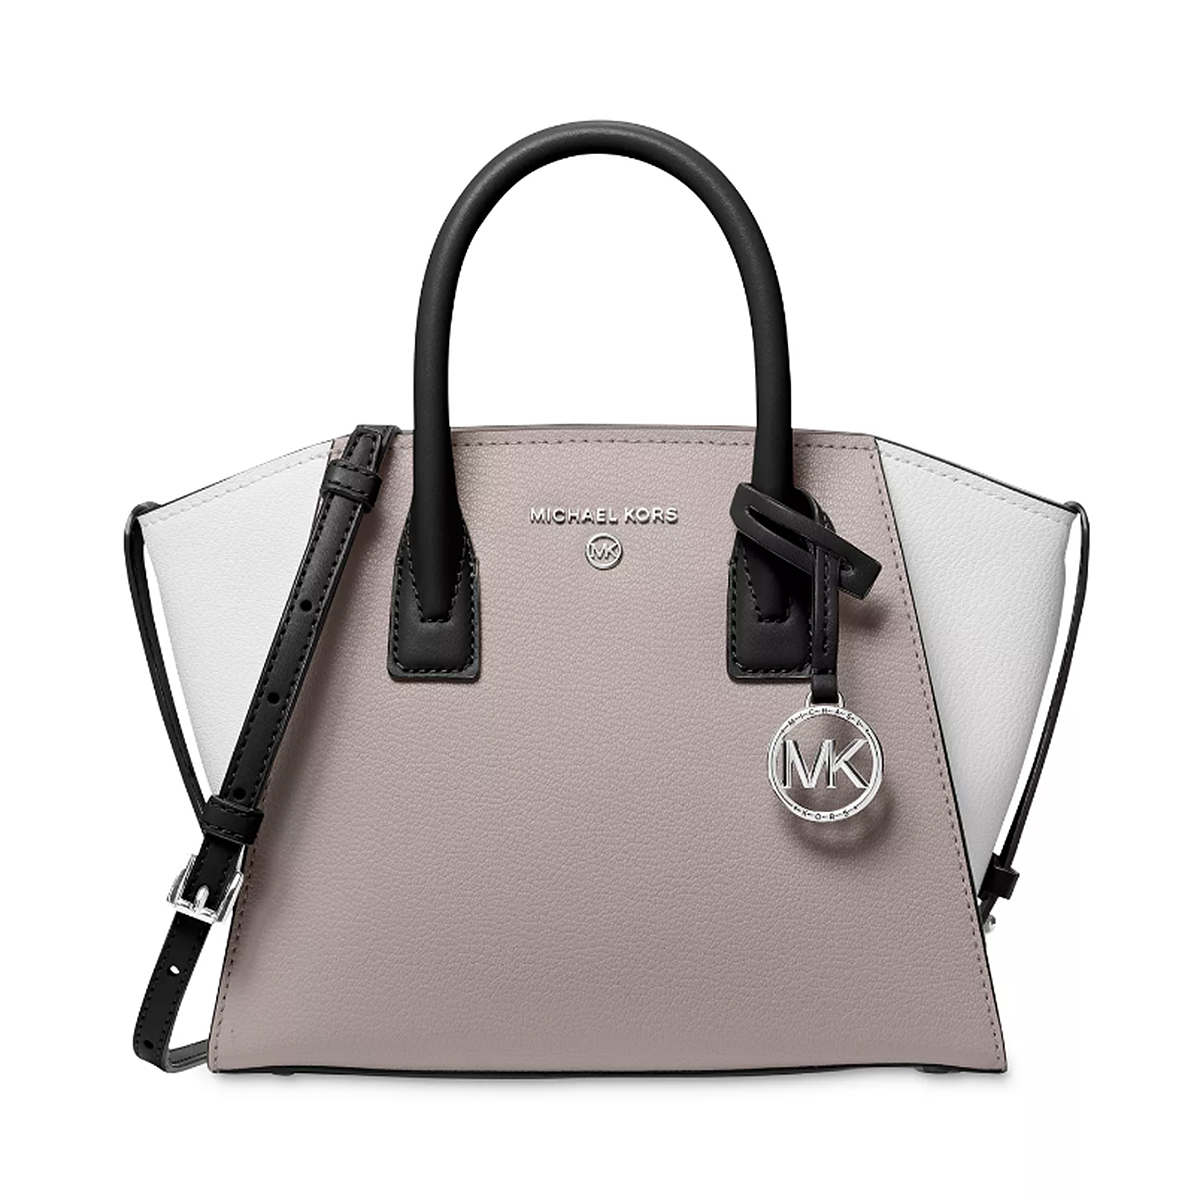 Macy's Style Crew | New! Michael kors Women's Handbag Collection